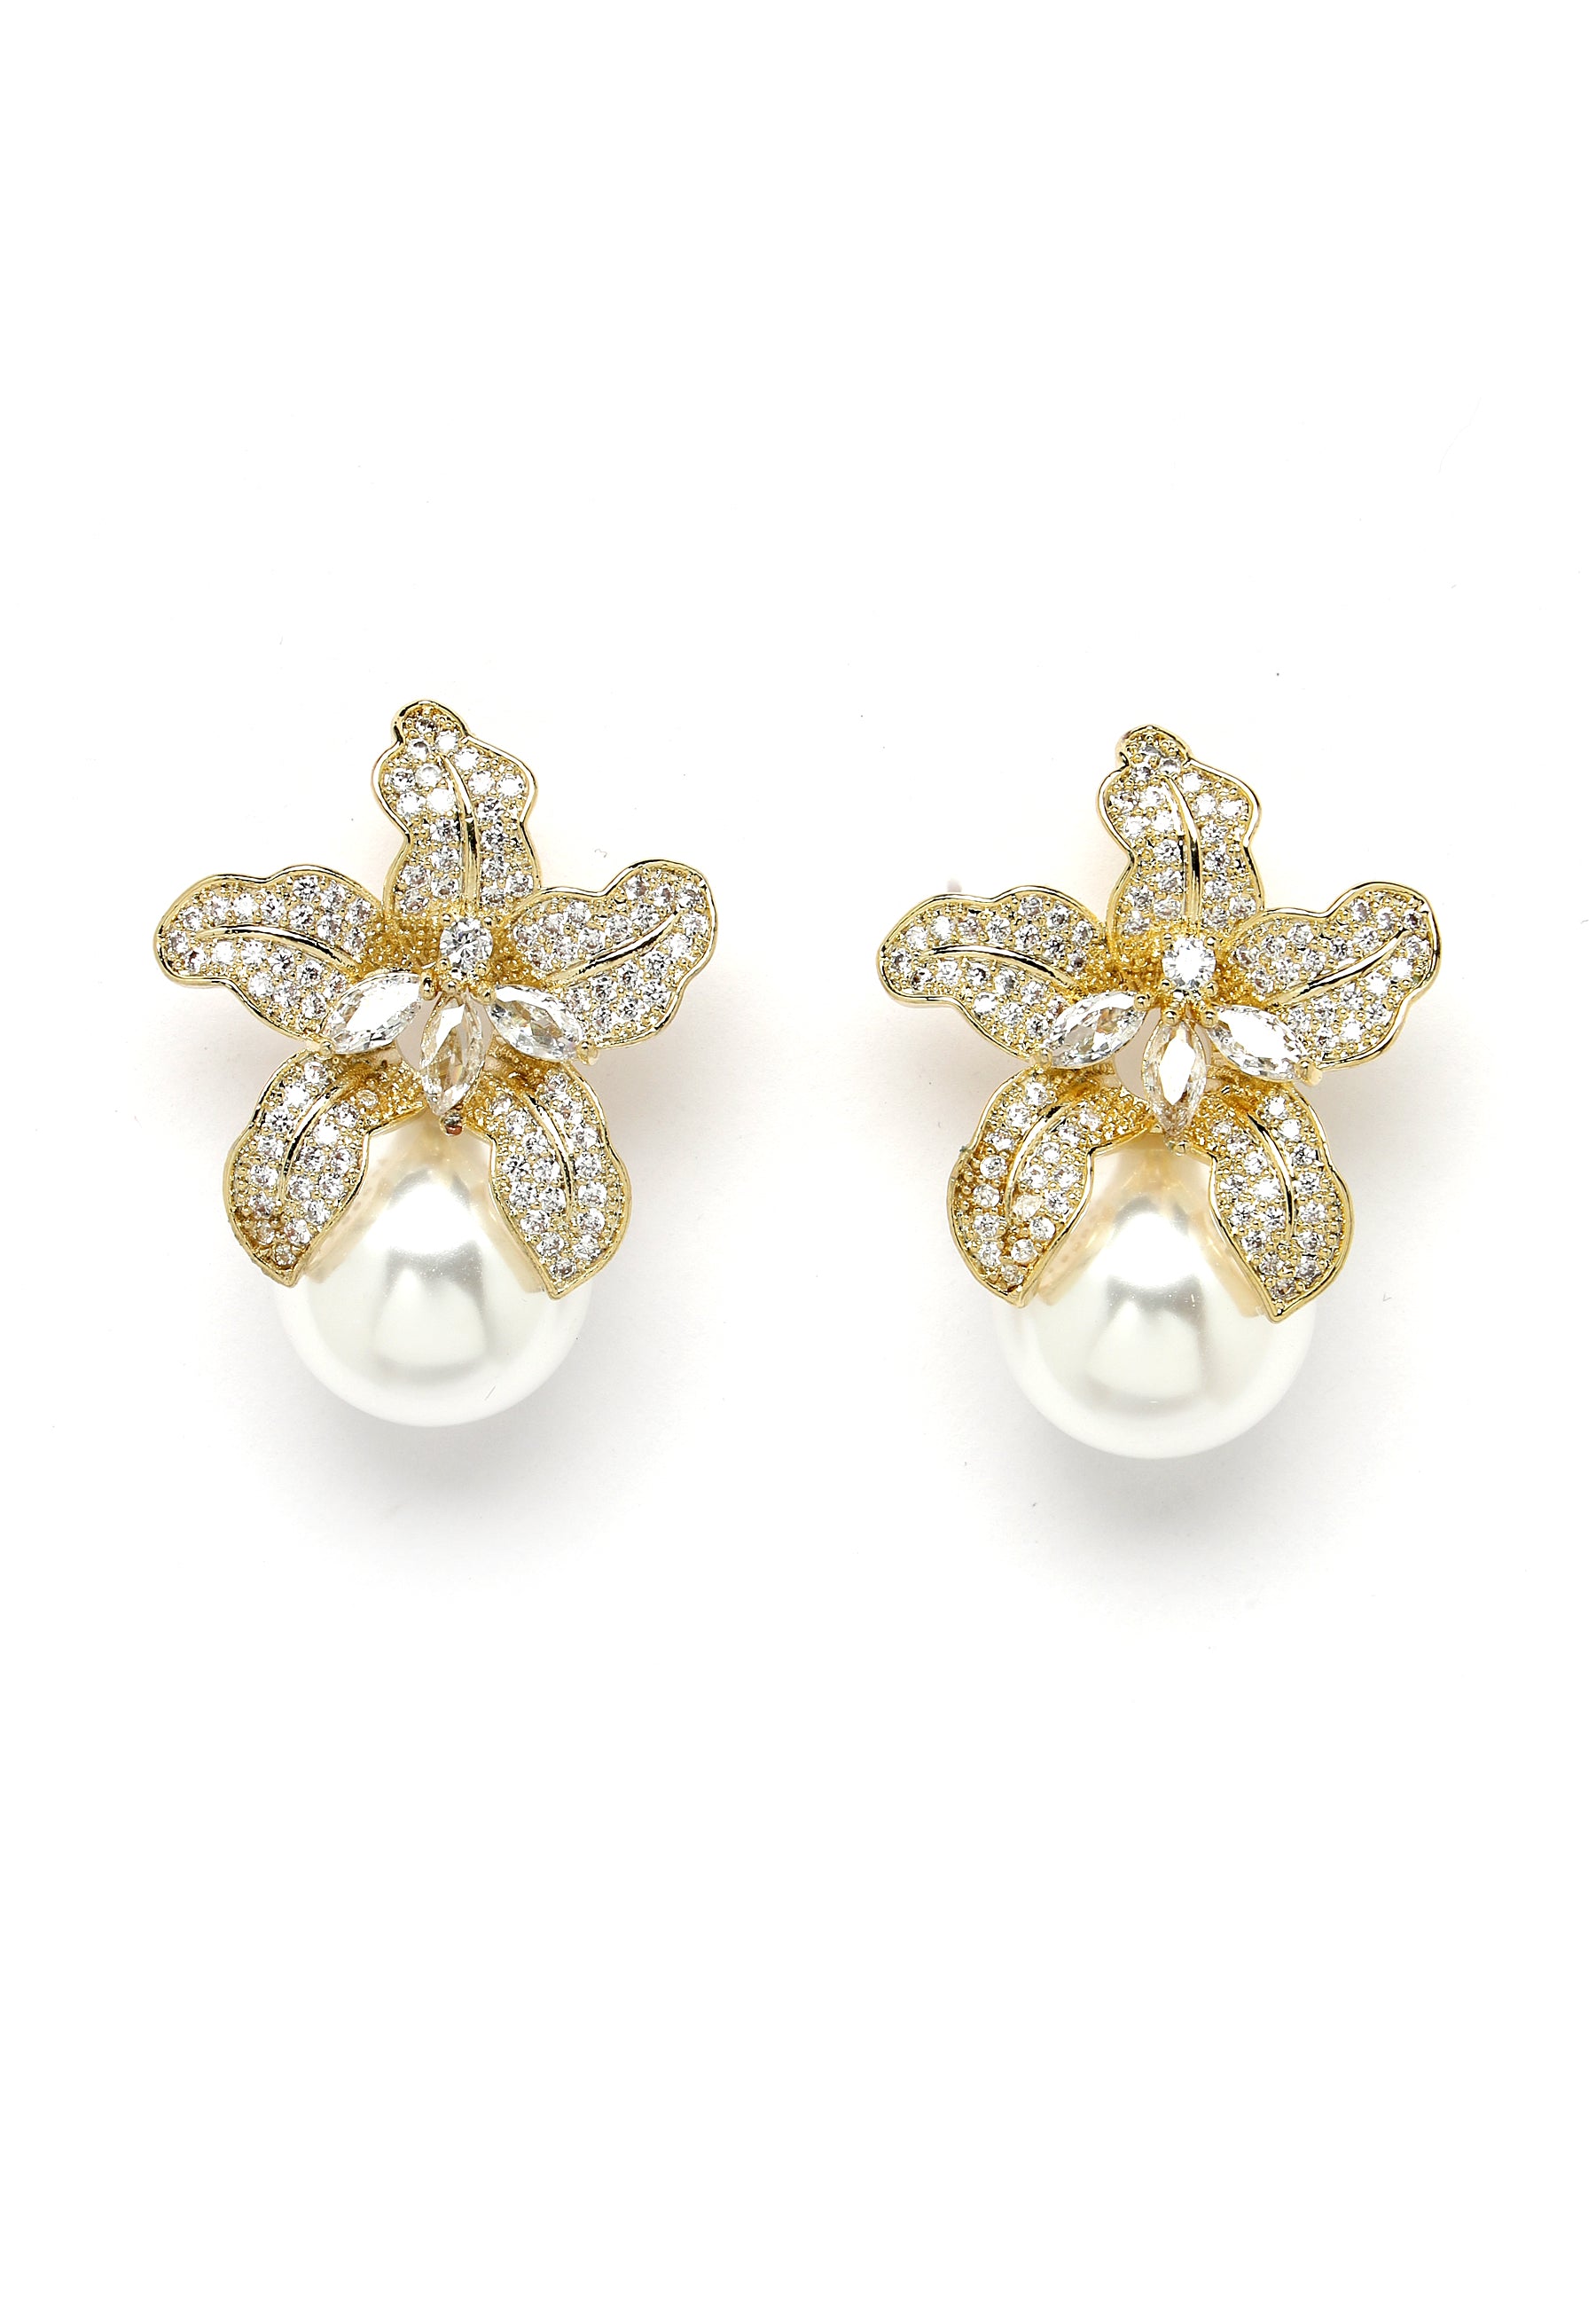 Avant-Garde Paris Bridesmaid Gold-Colored Crystal Earrings